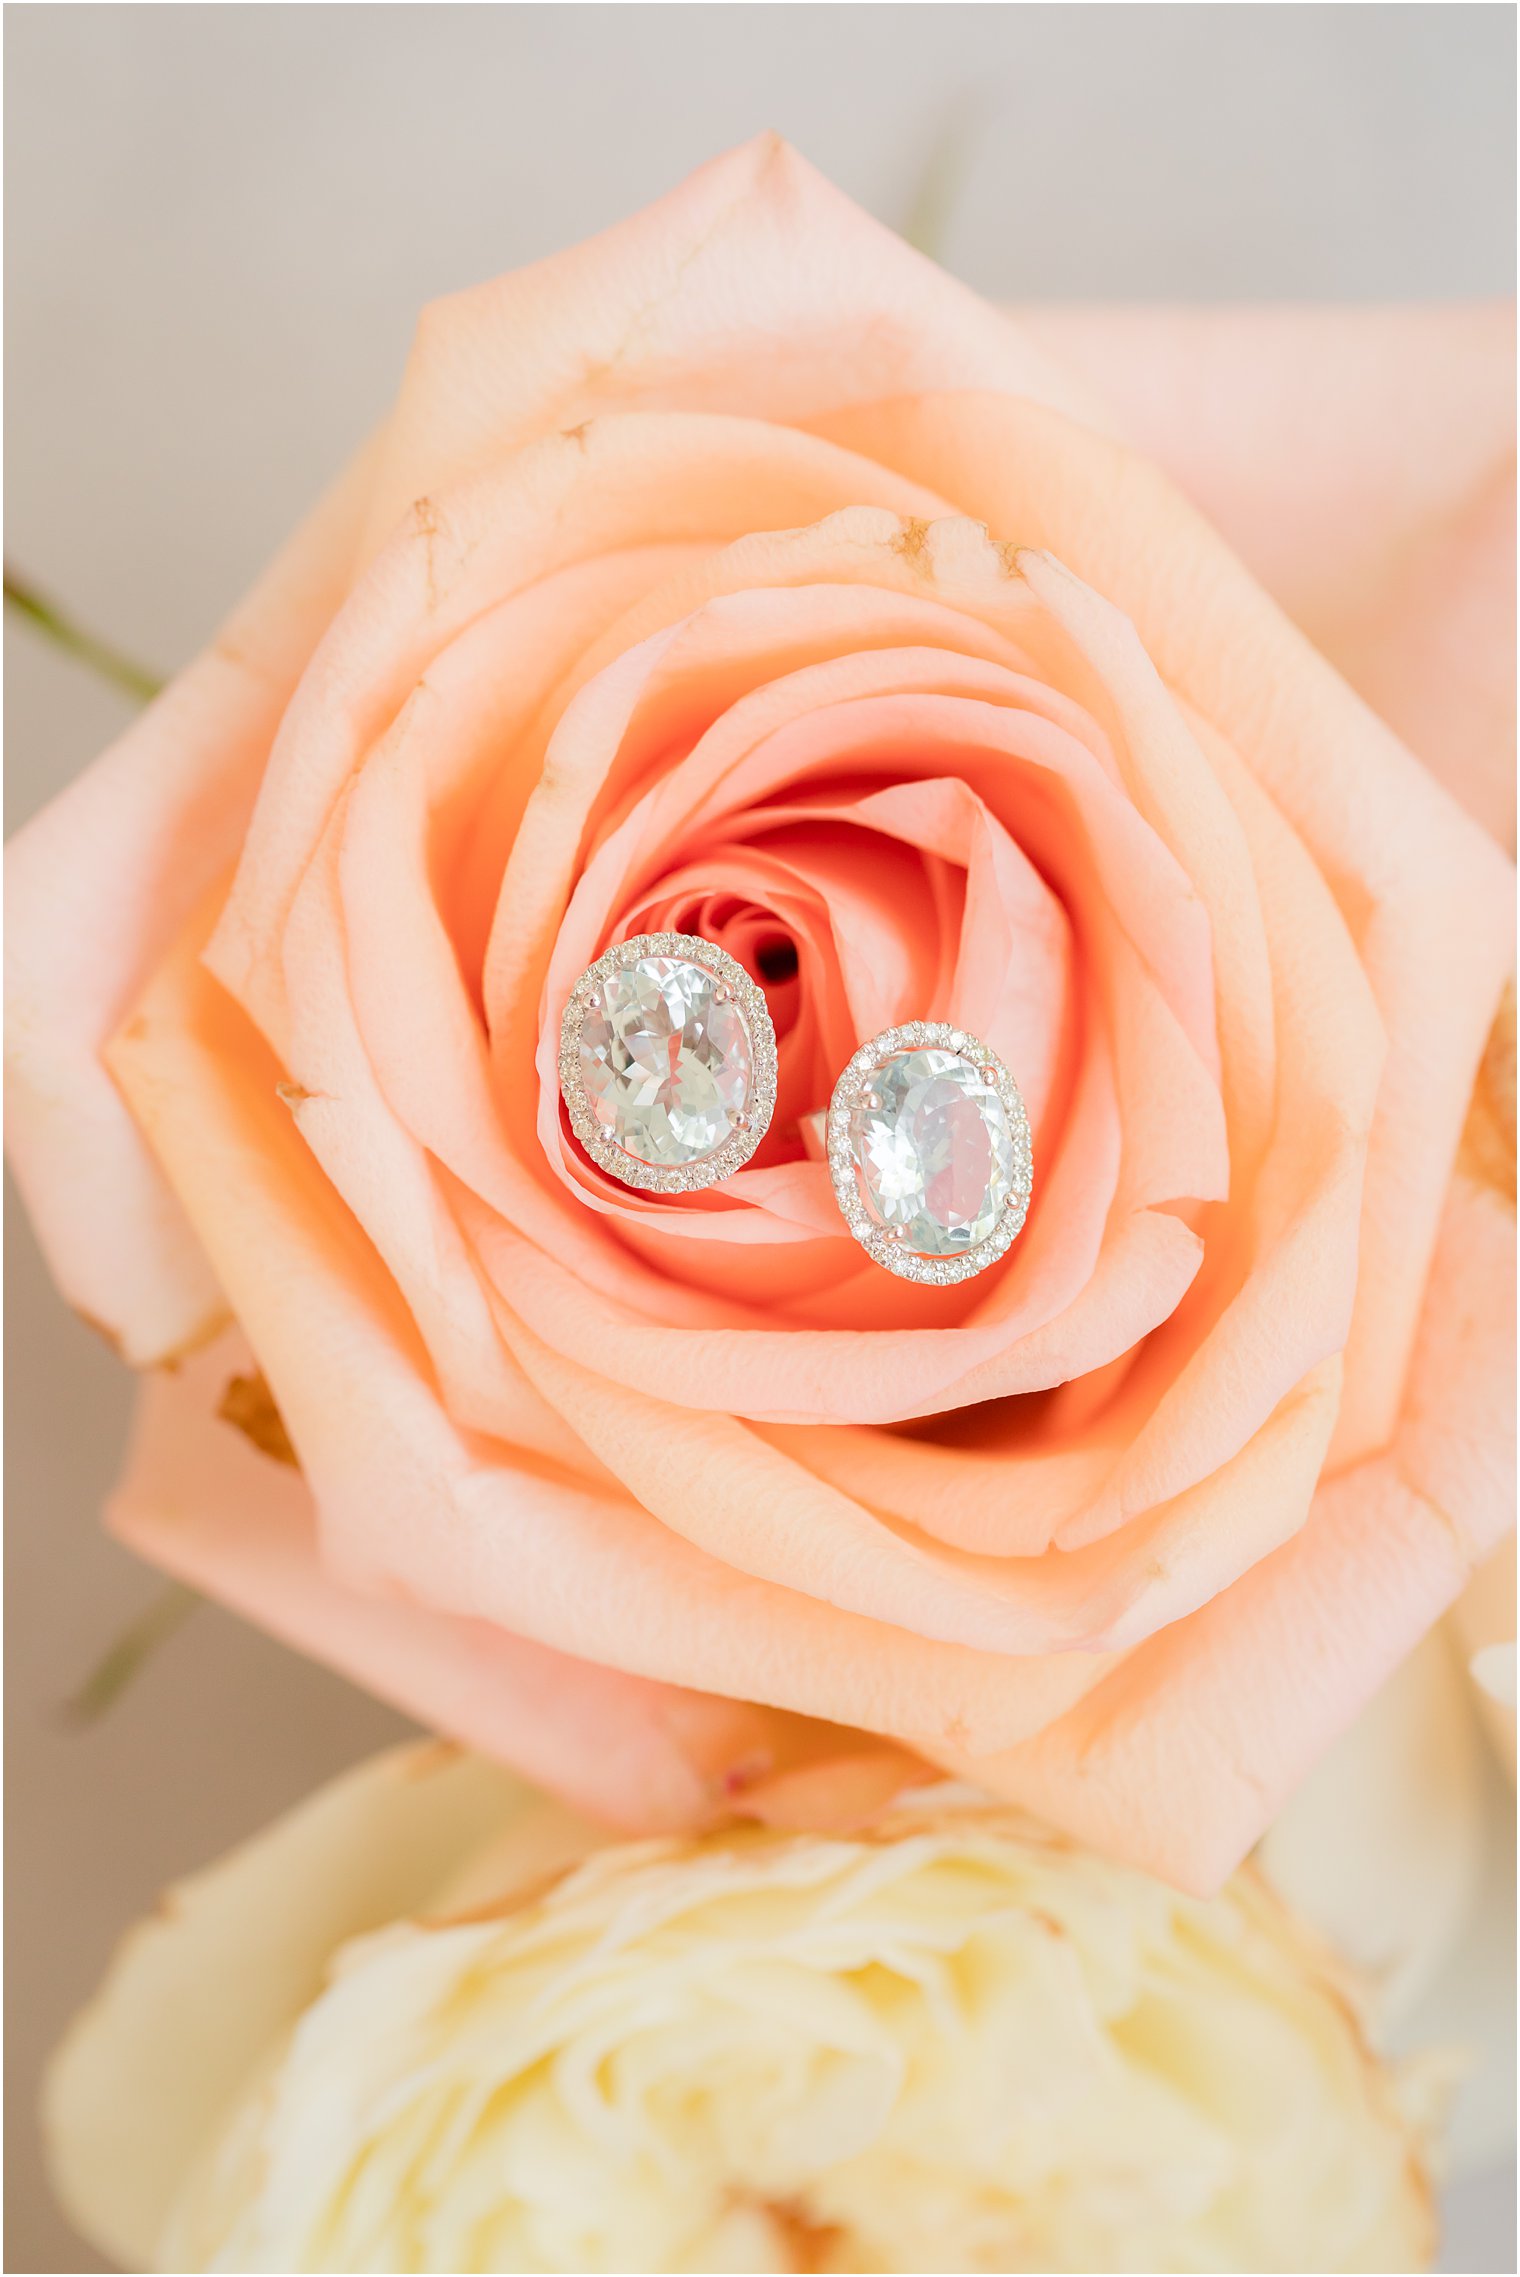 diamond earrings rest on peach rose before fall wedding